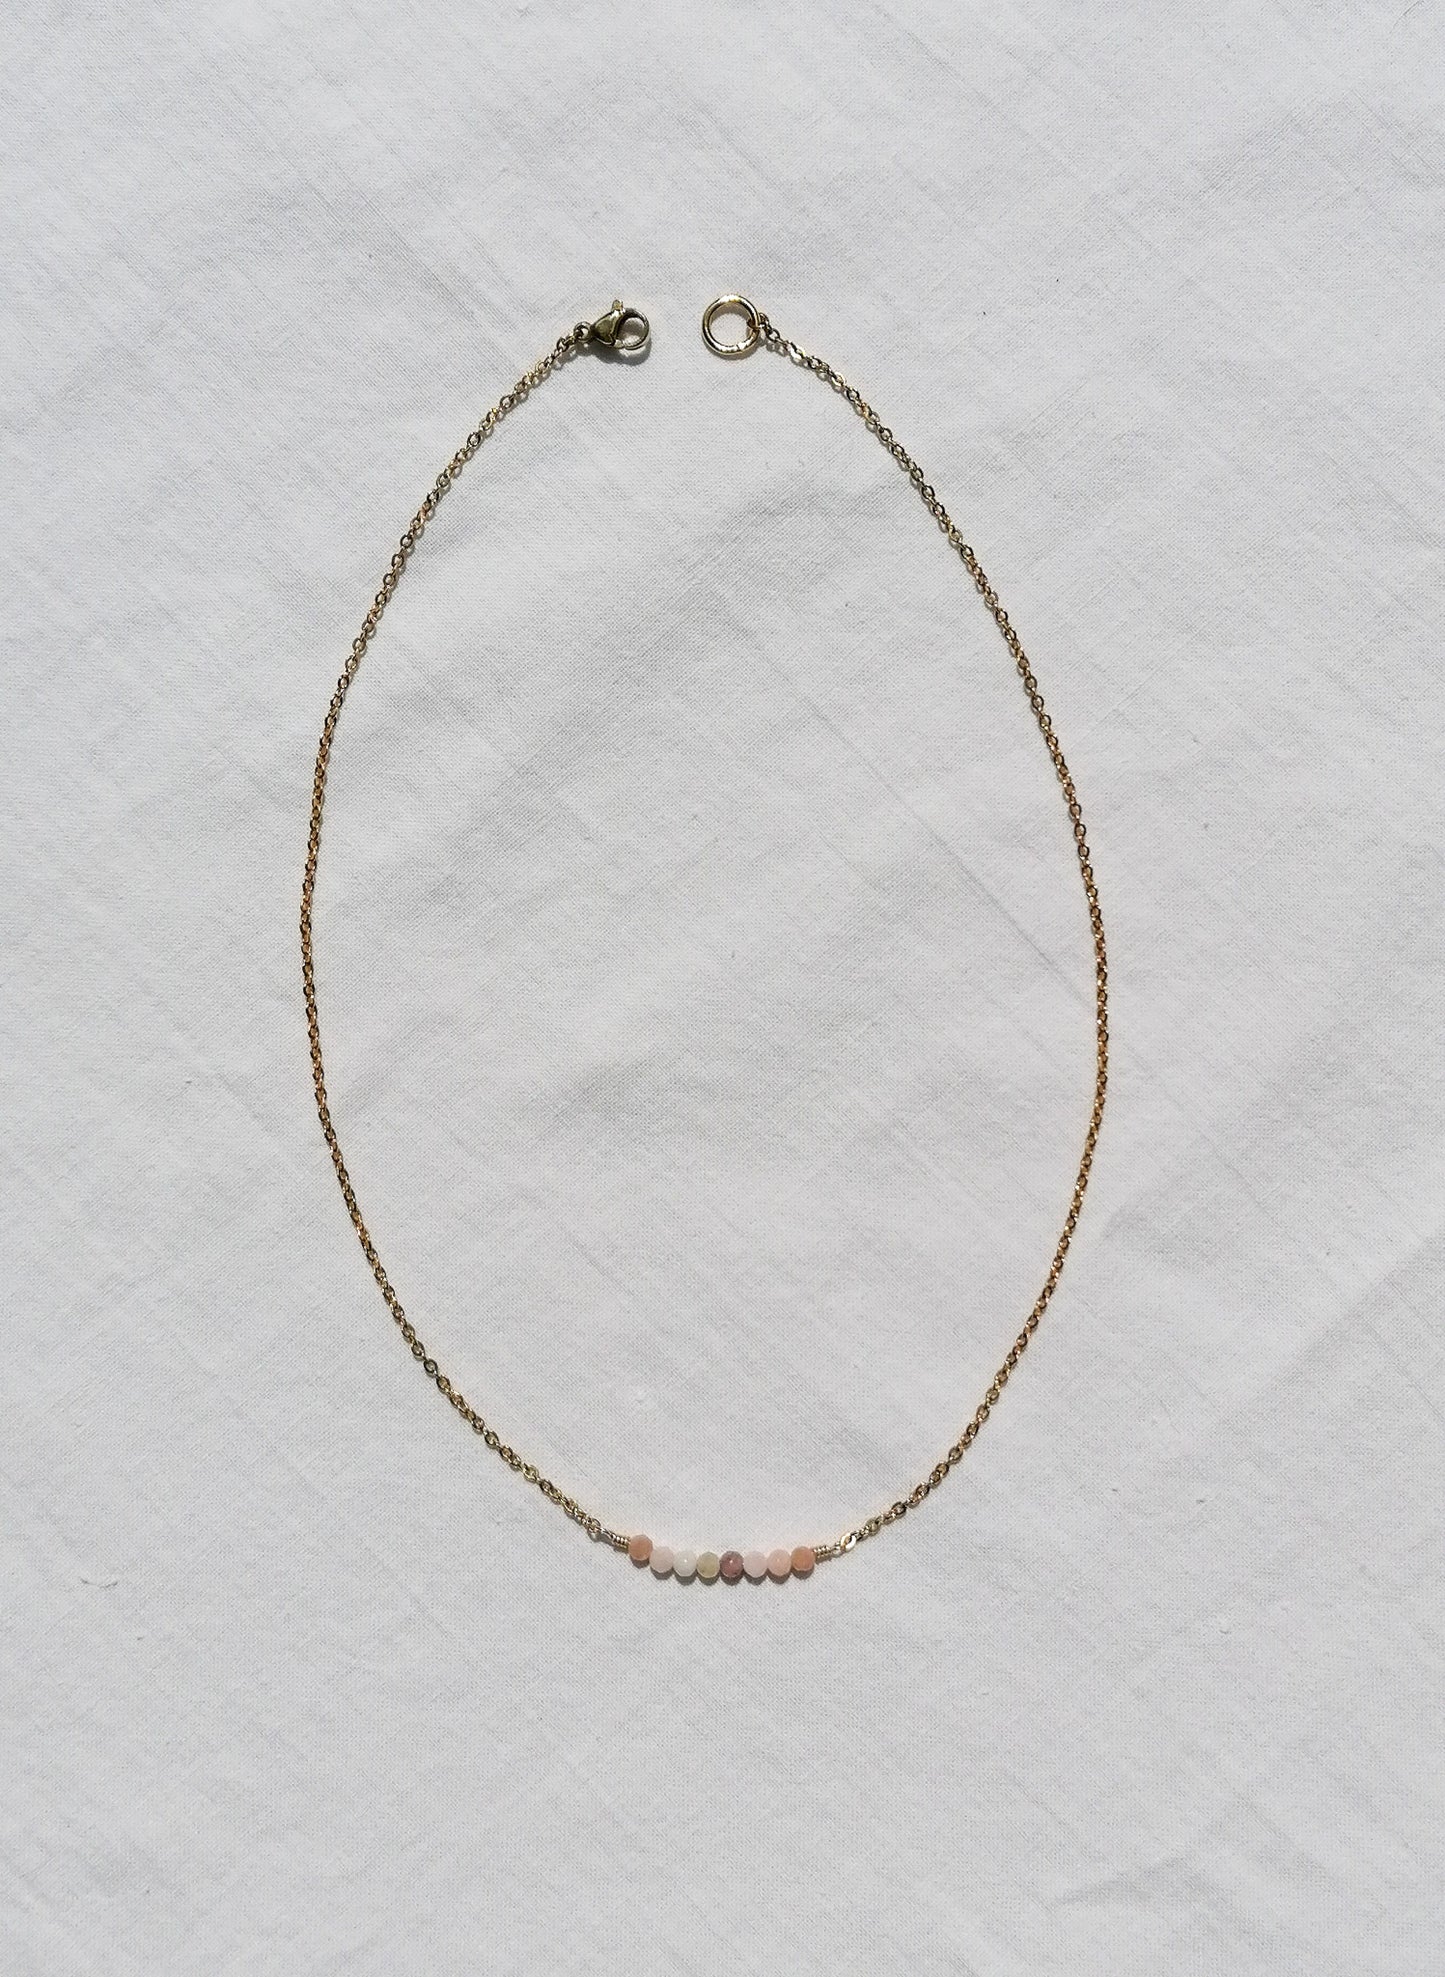 Pink opal bar necklace